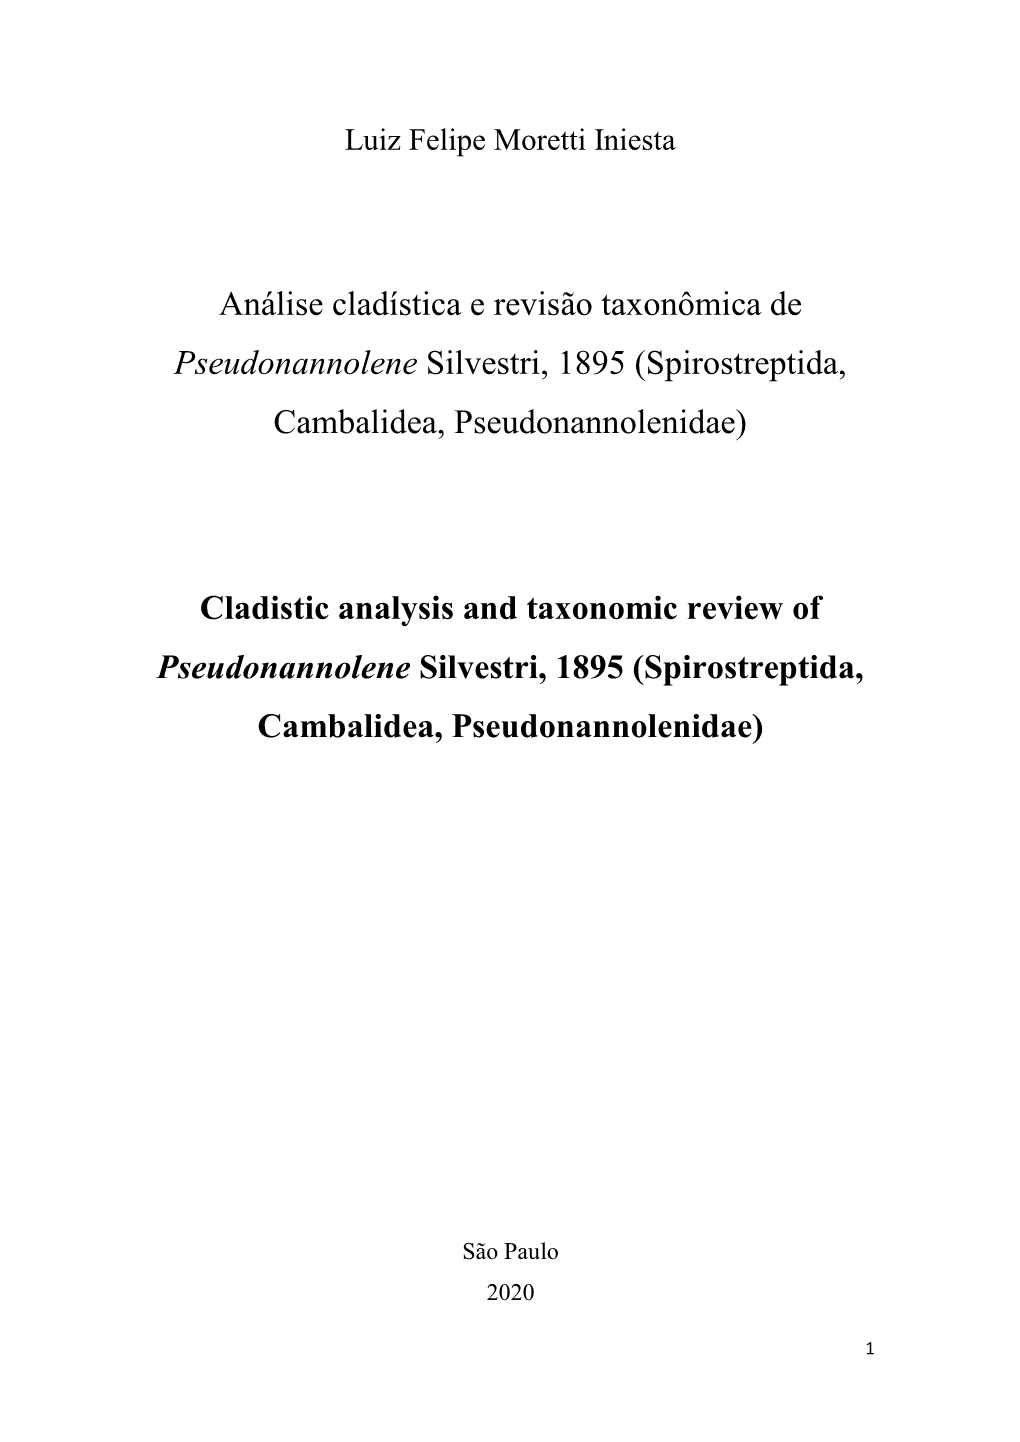 Análise Cladística E Revisão Taxonômica De Pseudonannolene Silvestri, 1895 (Spirostreptida, Cambalidea, Pseudonannolenidae)